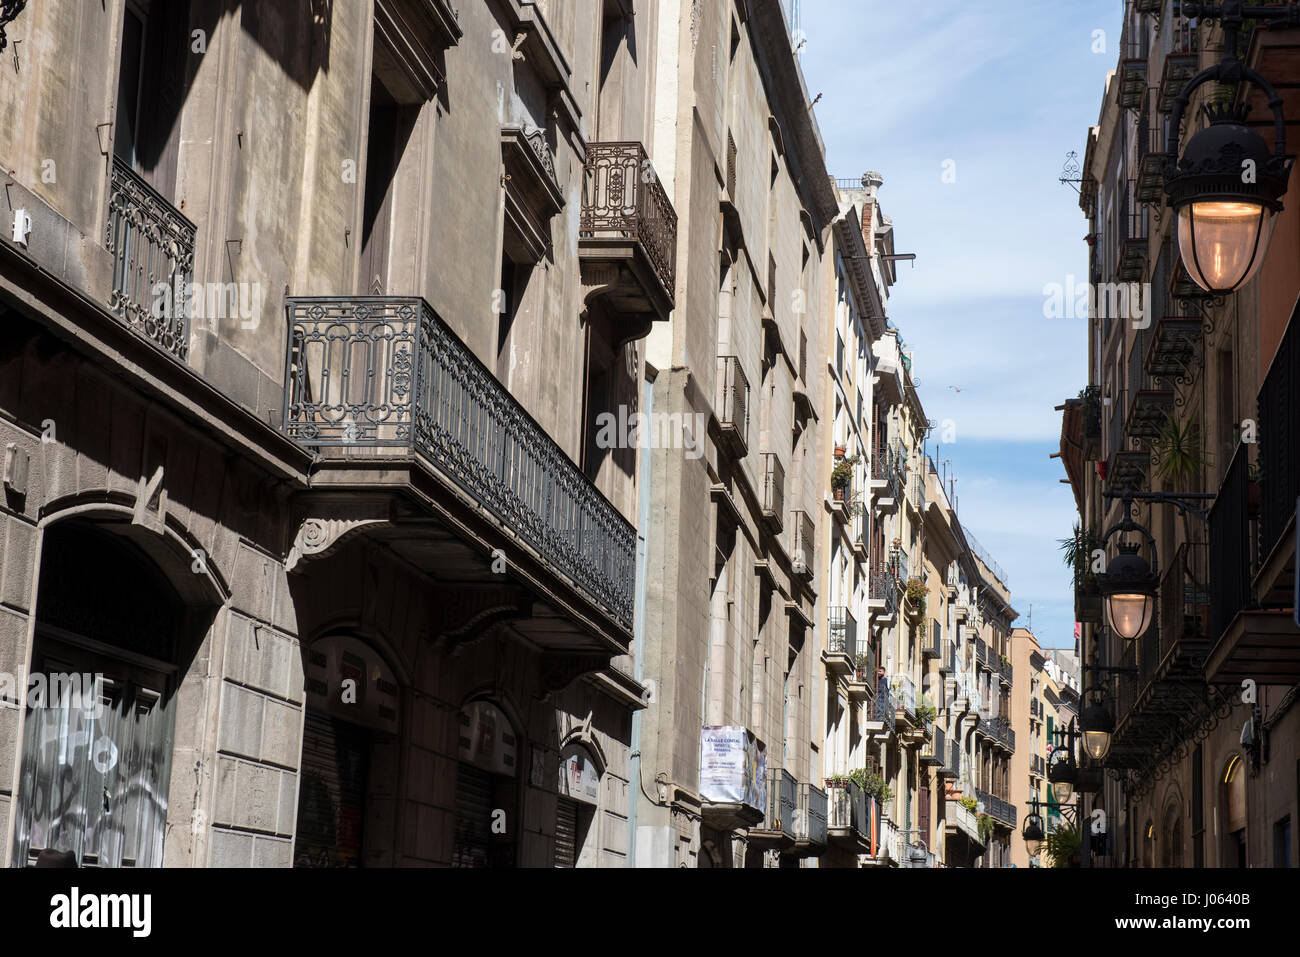 Spain carrer de sant pere mes alt hi-res stock photography and images -  Alamy